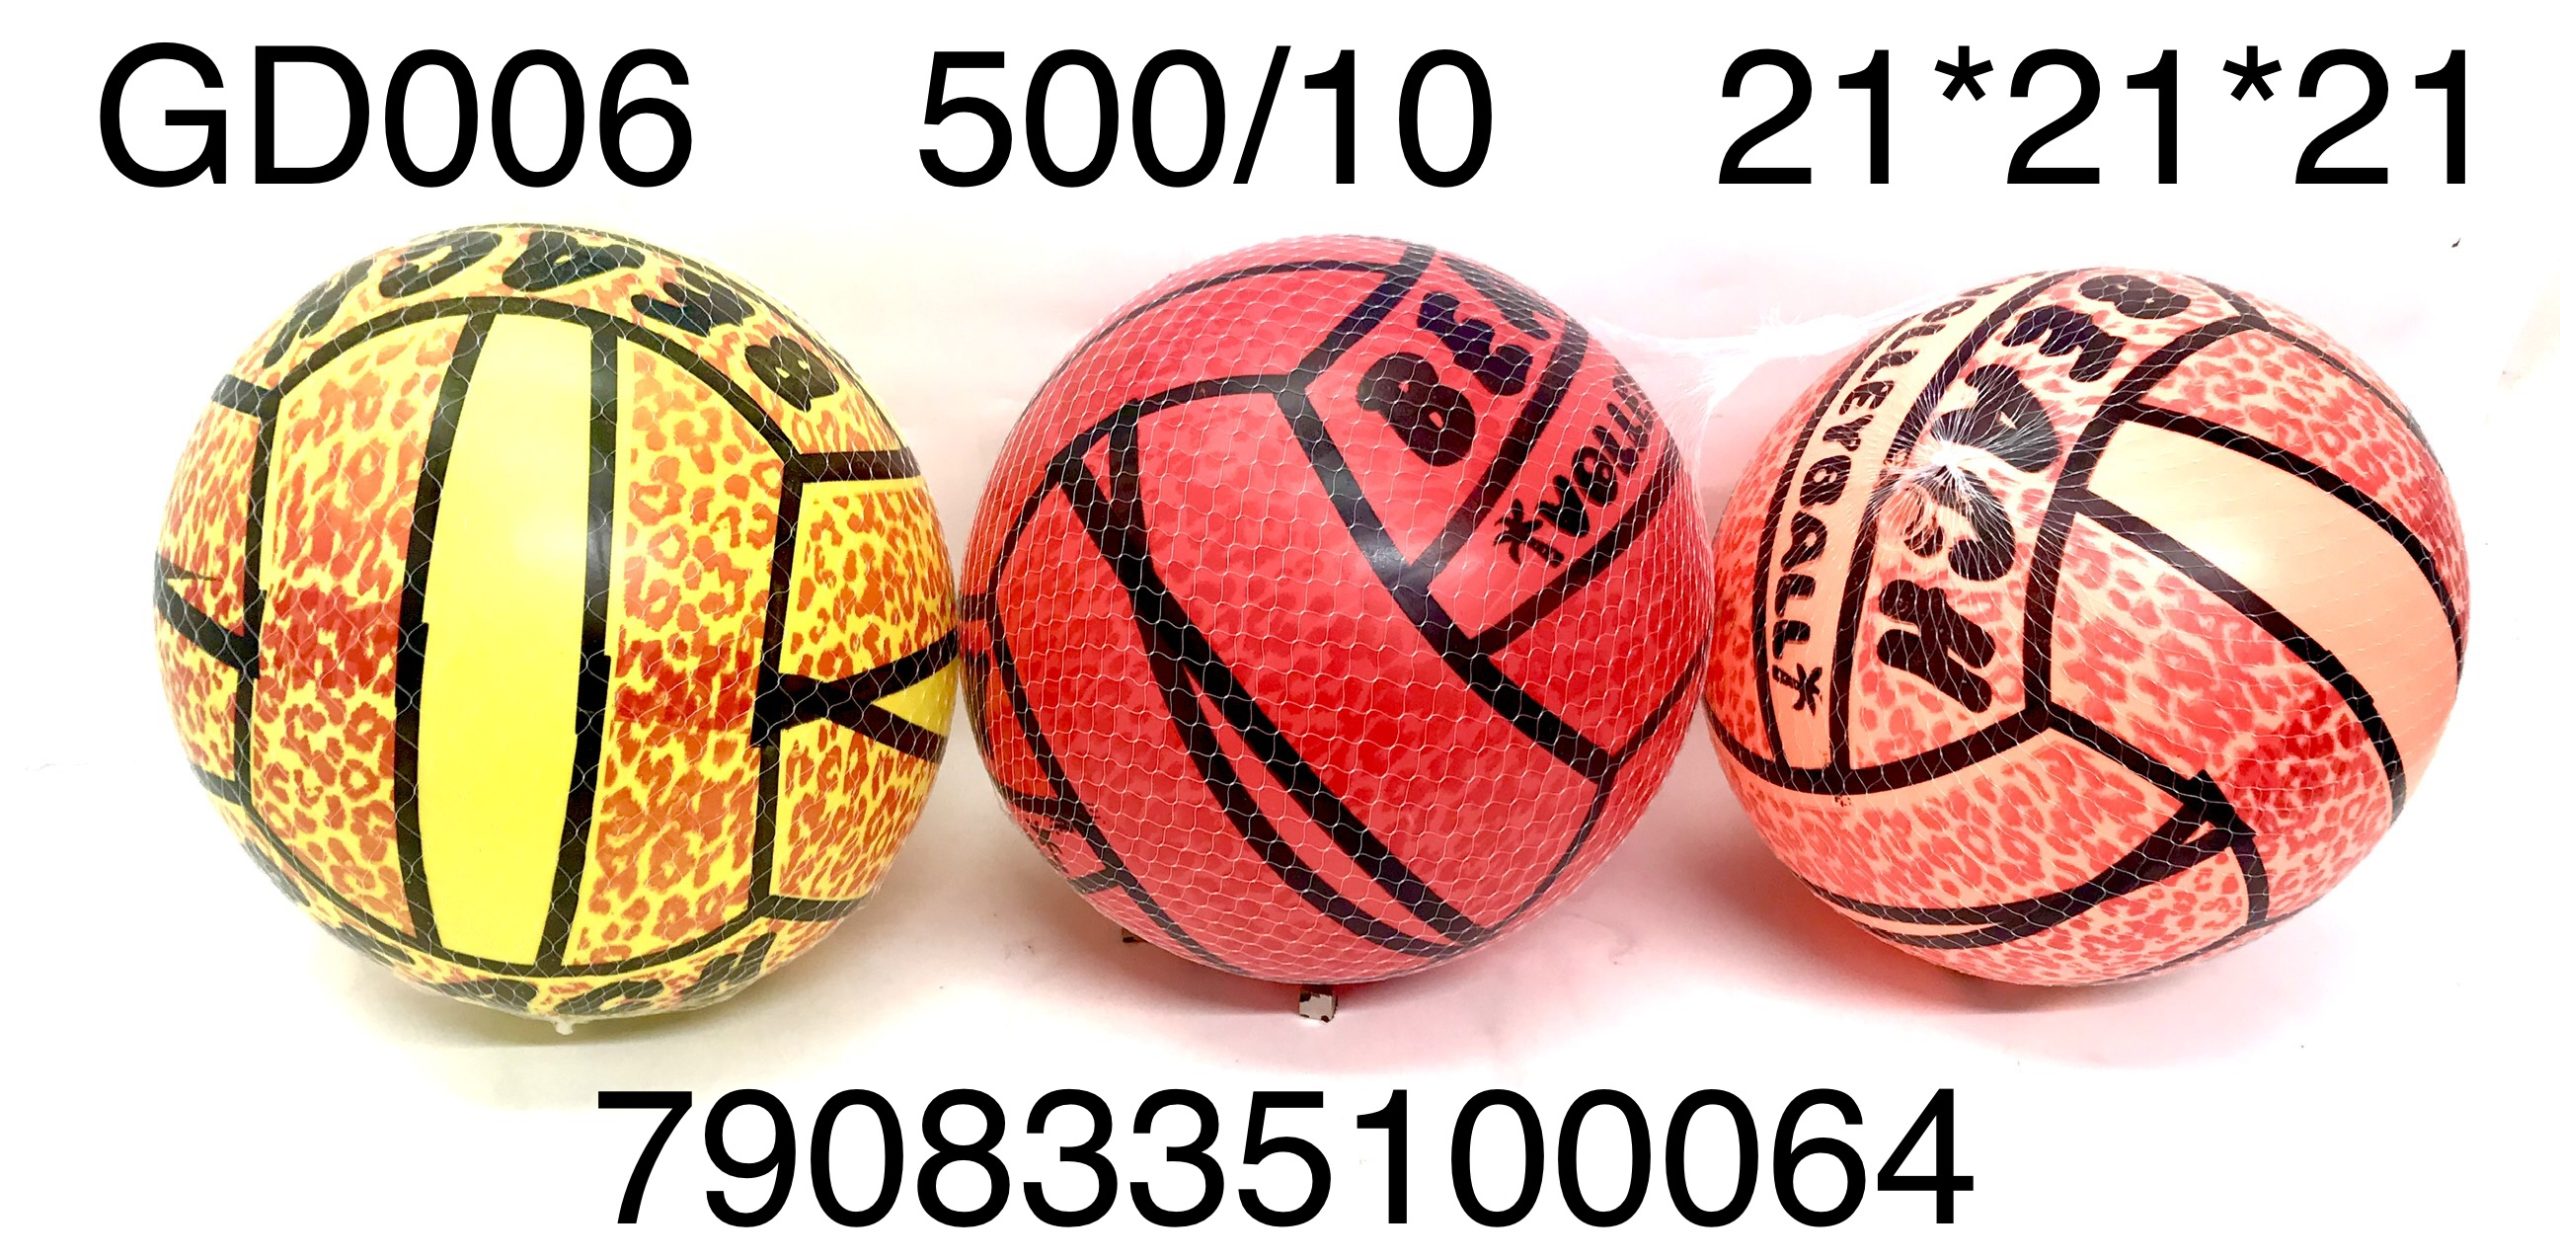 Мяч GD006 ПВХ д=20см - Саратов 